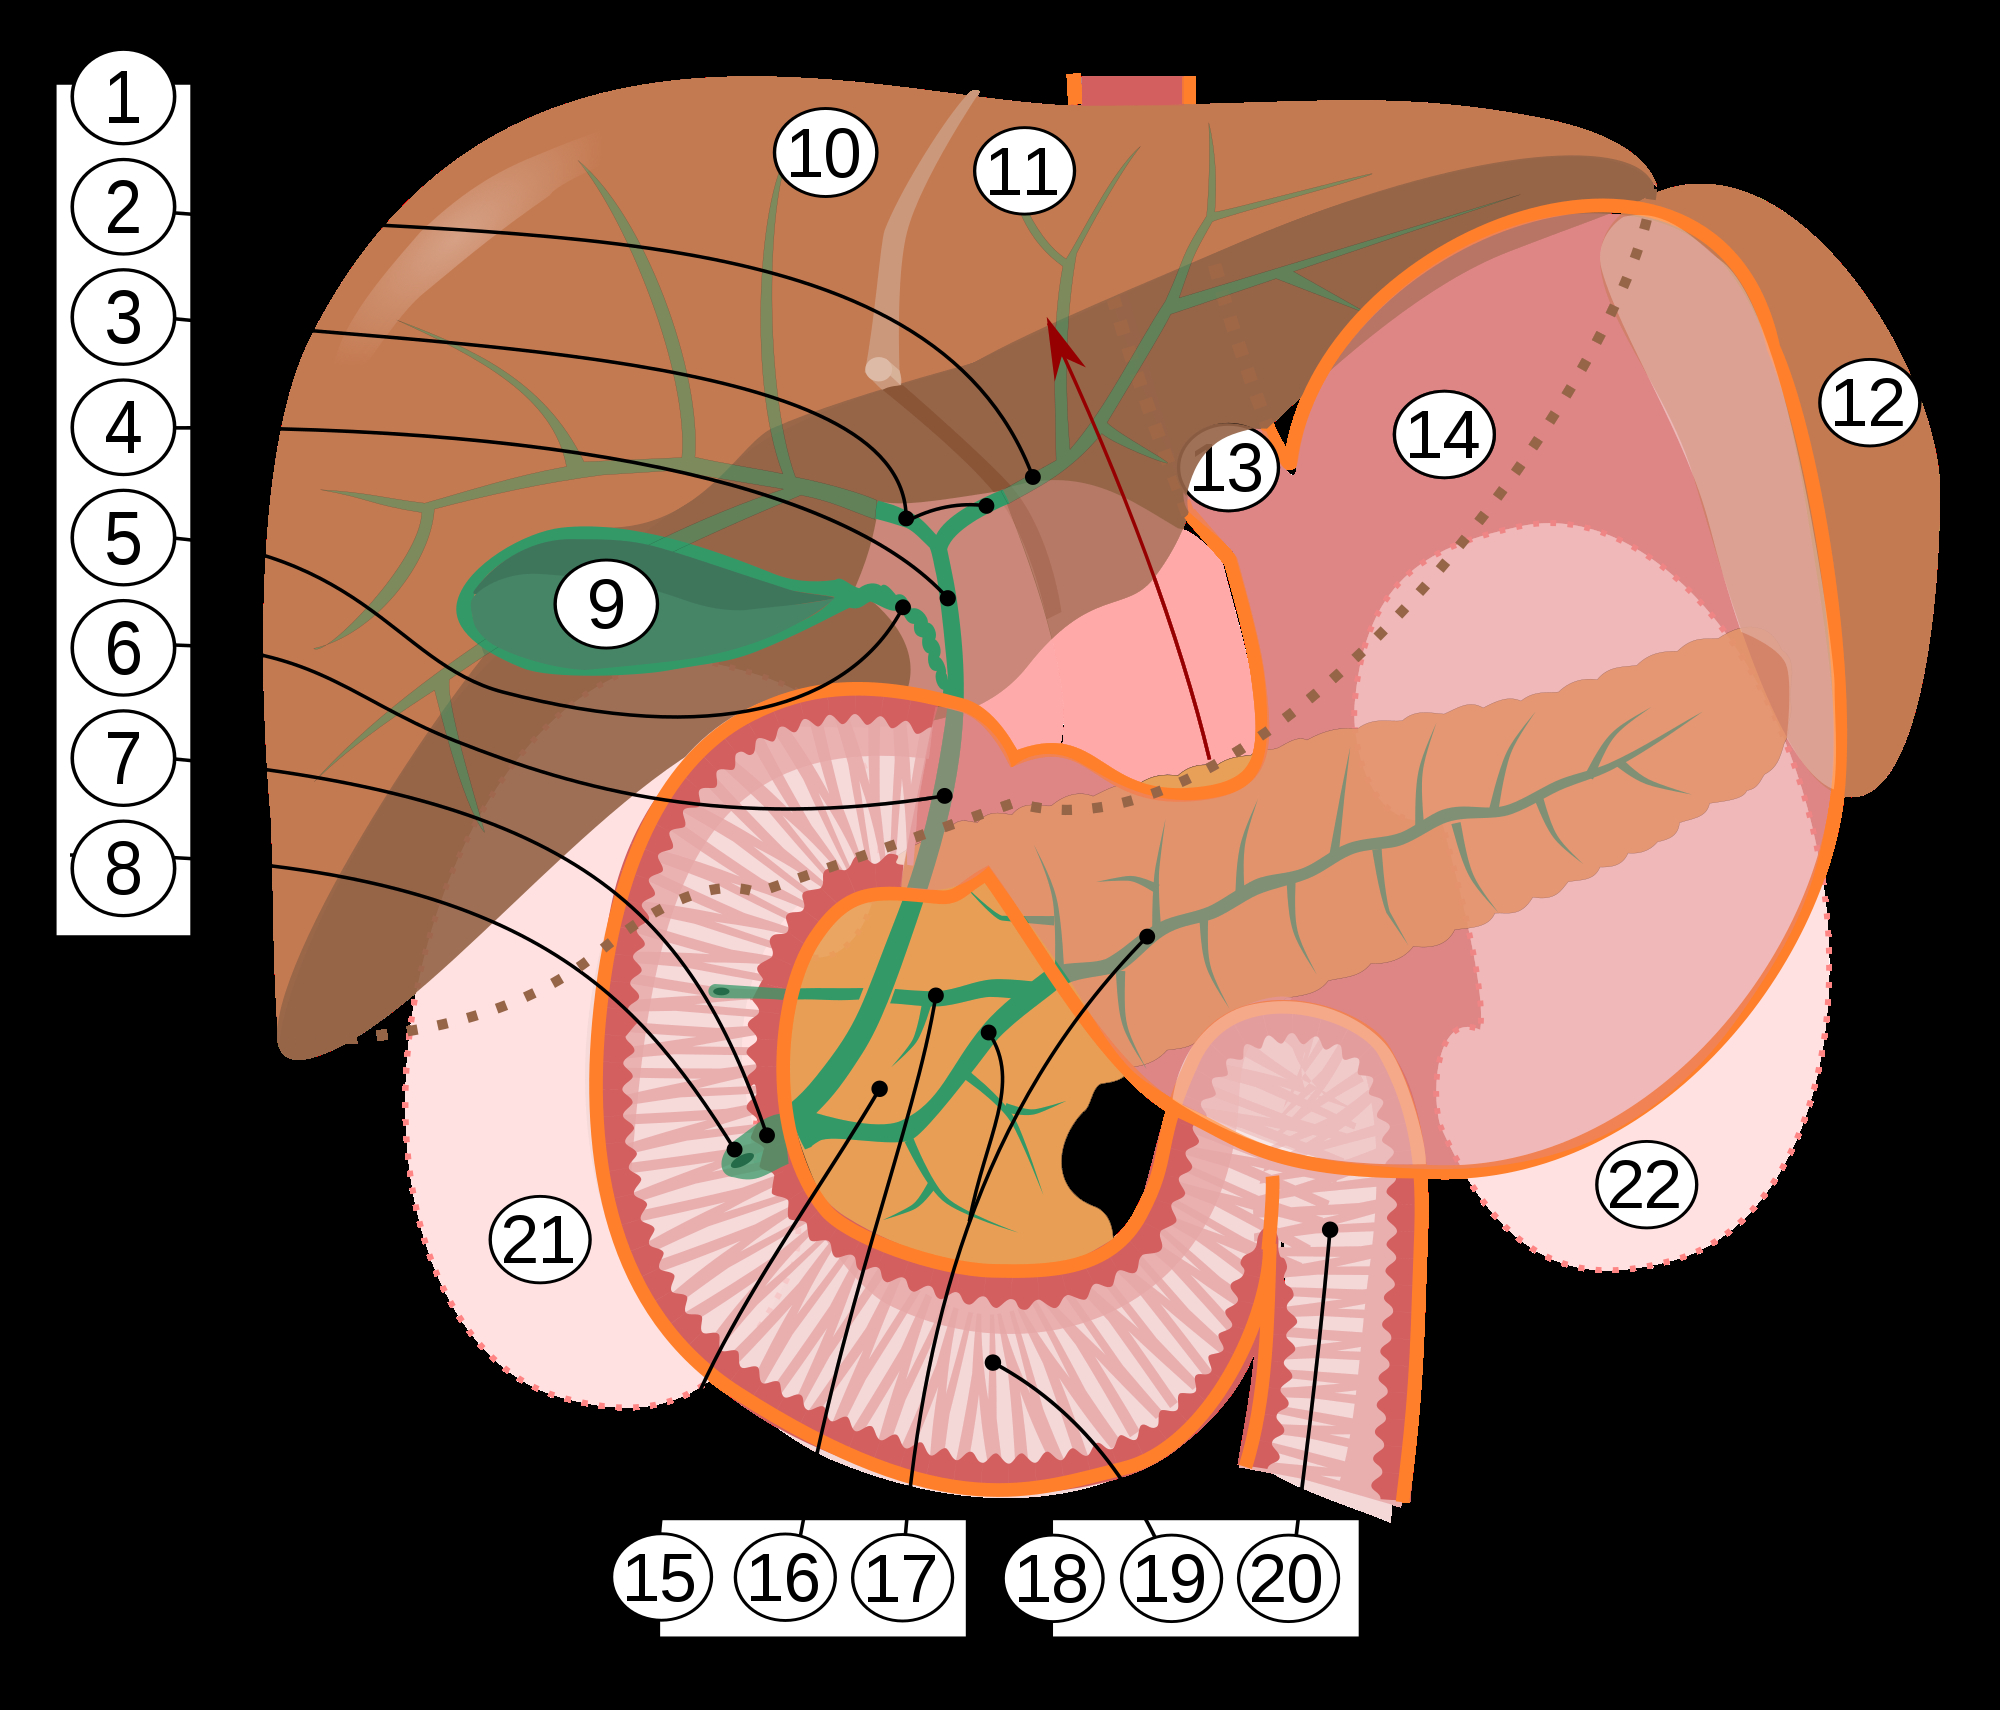 Gallbladder Pain Location Diagram Gallbladder Wikipedia